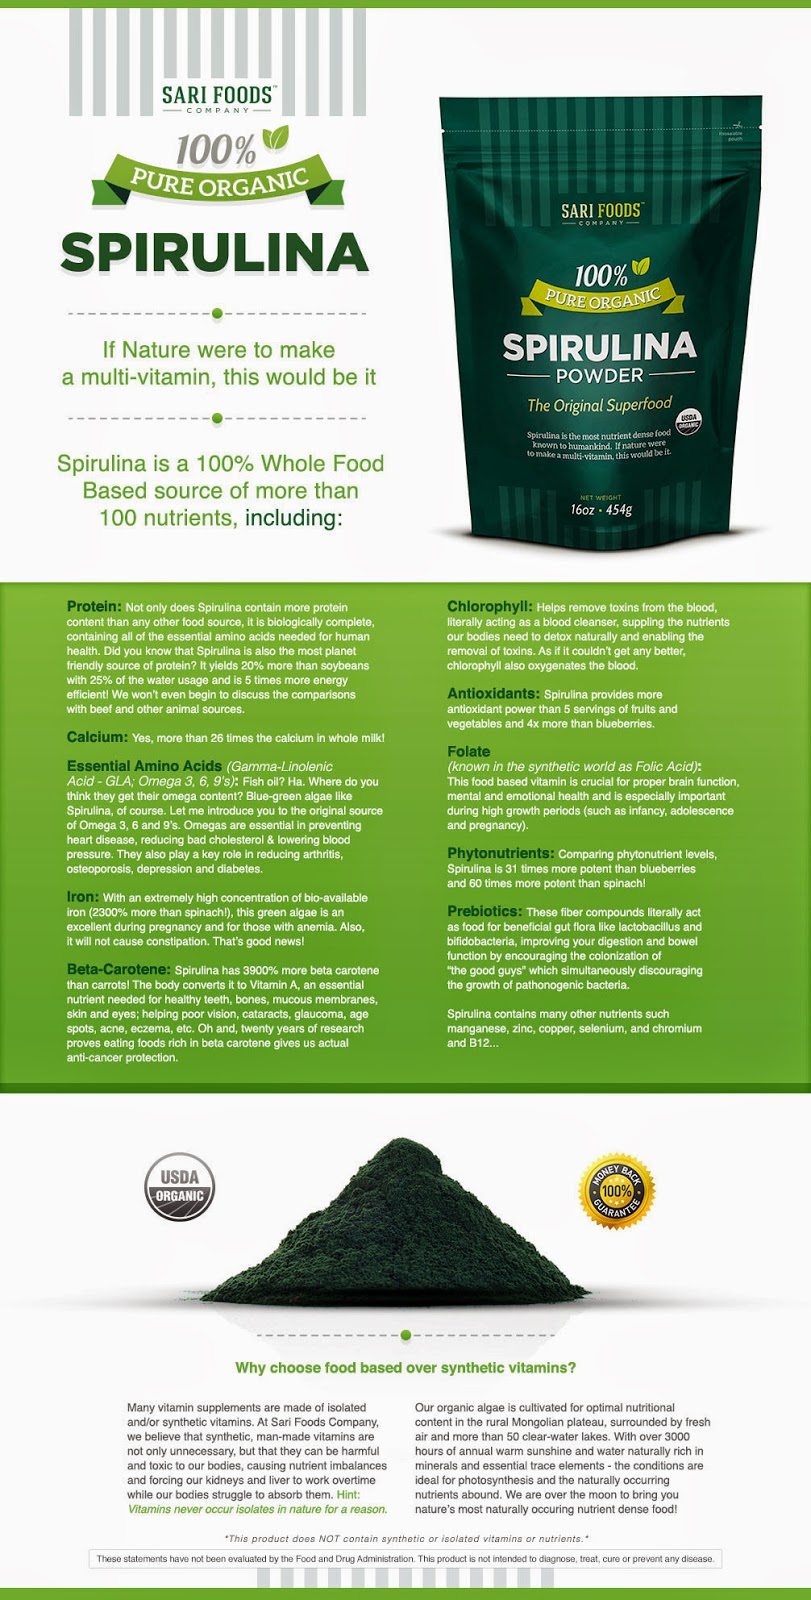 benefits of spirulina